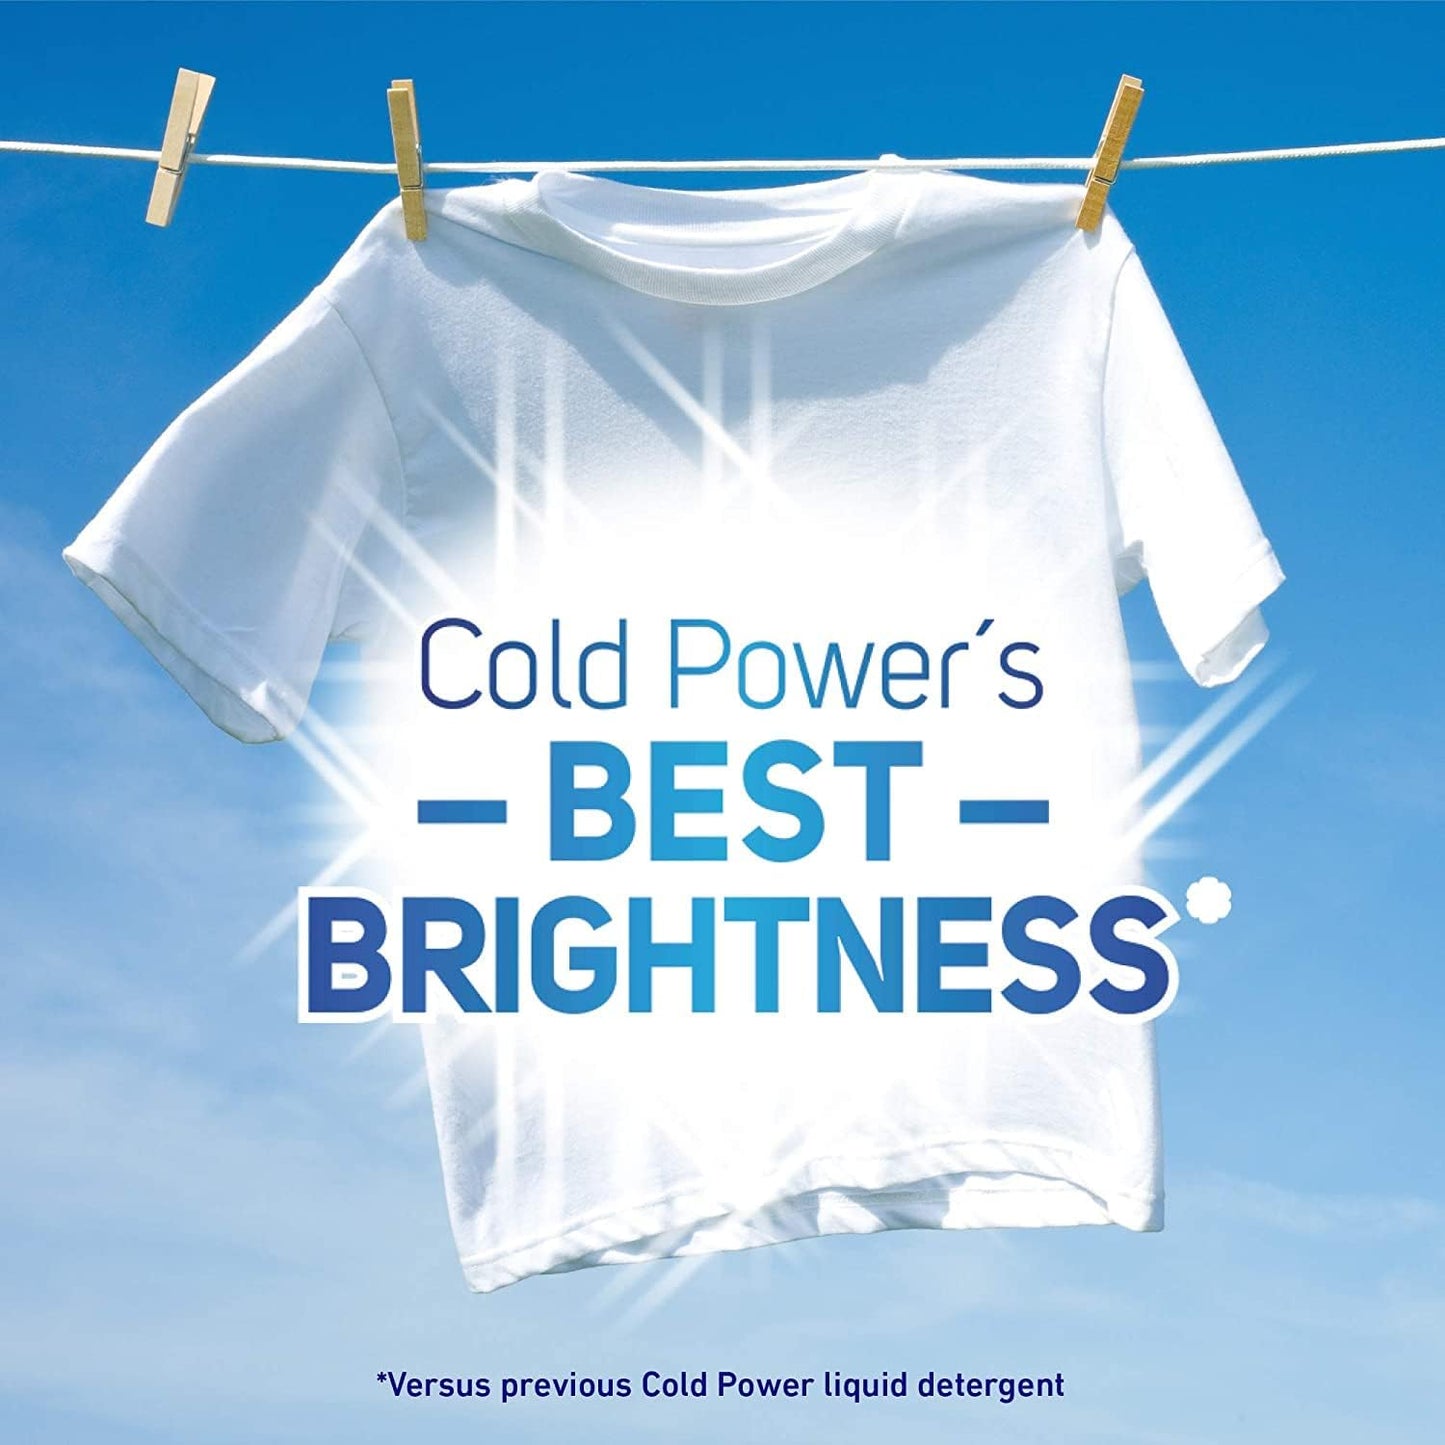 Cold Power Advanced Clean Powder Laundry Detergent 6kg